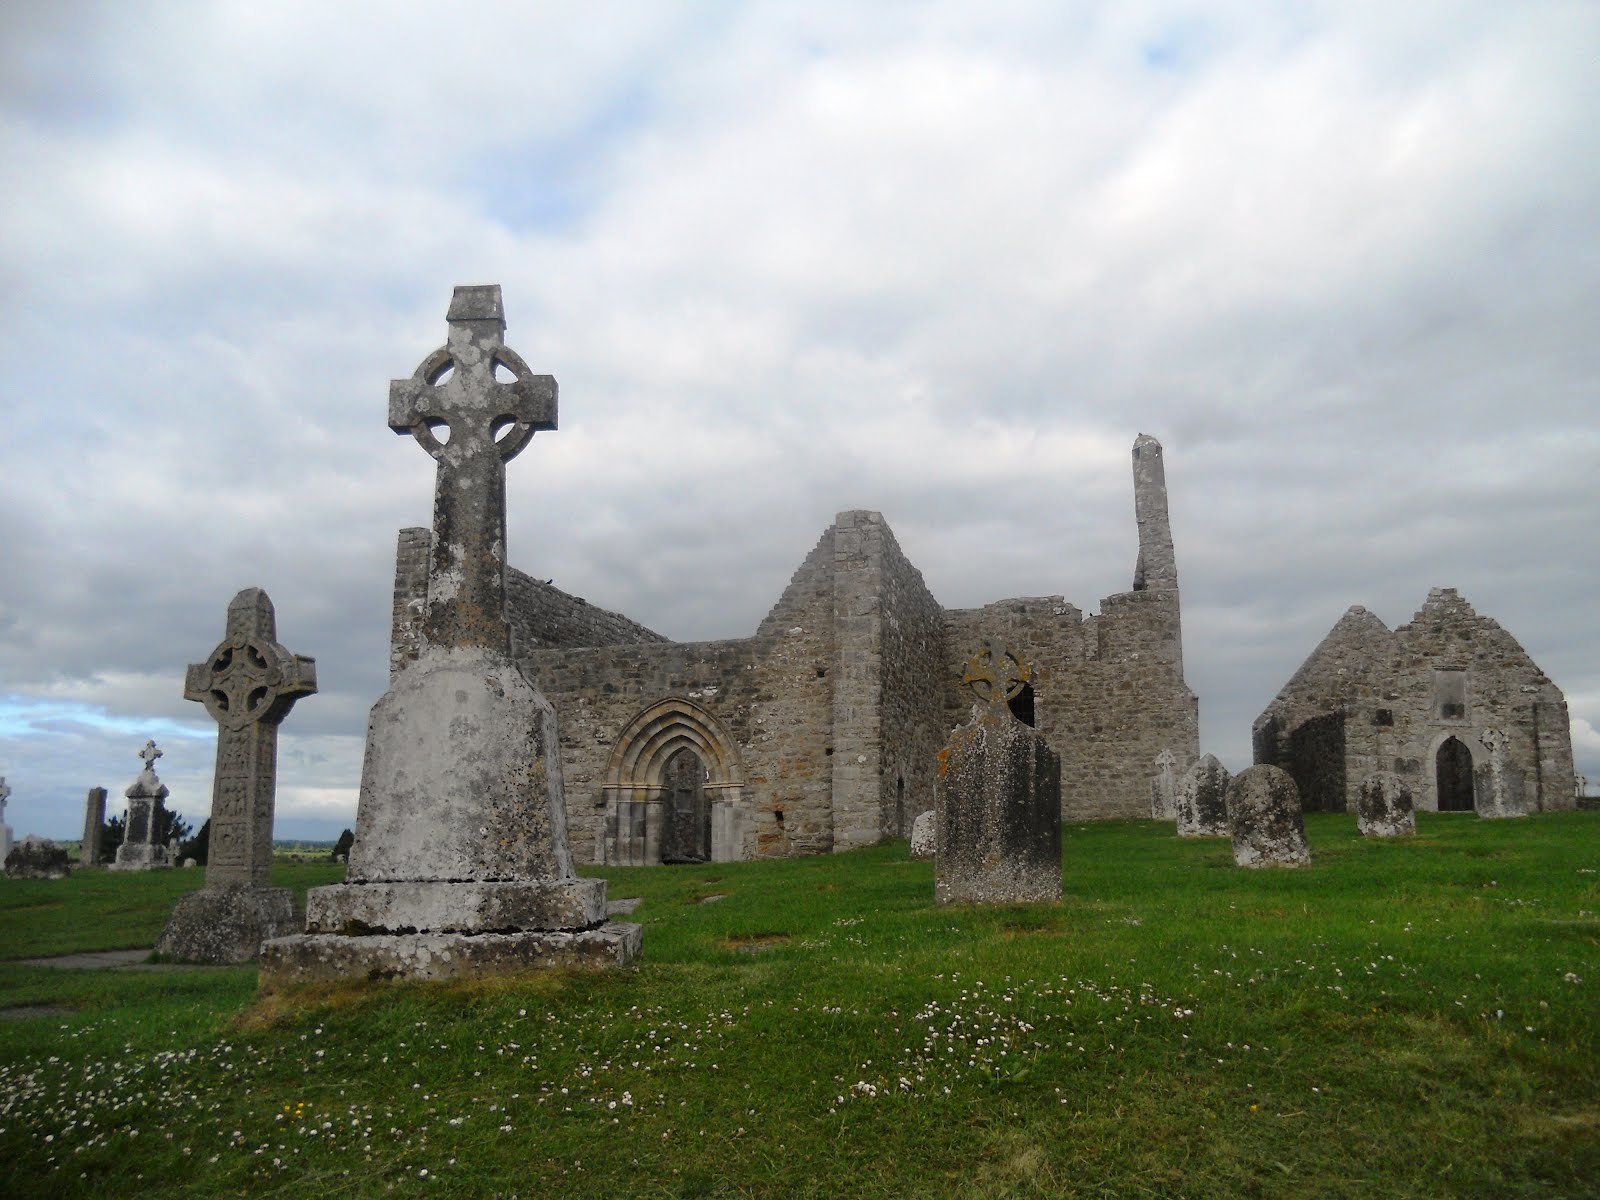 St. Patrick, forgiveness, encourages interfaith work | Baptist ...